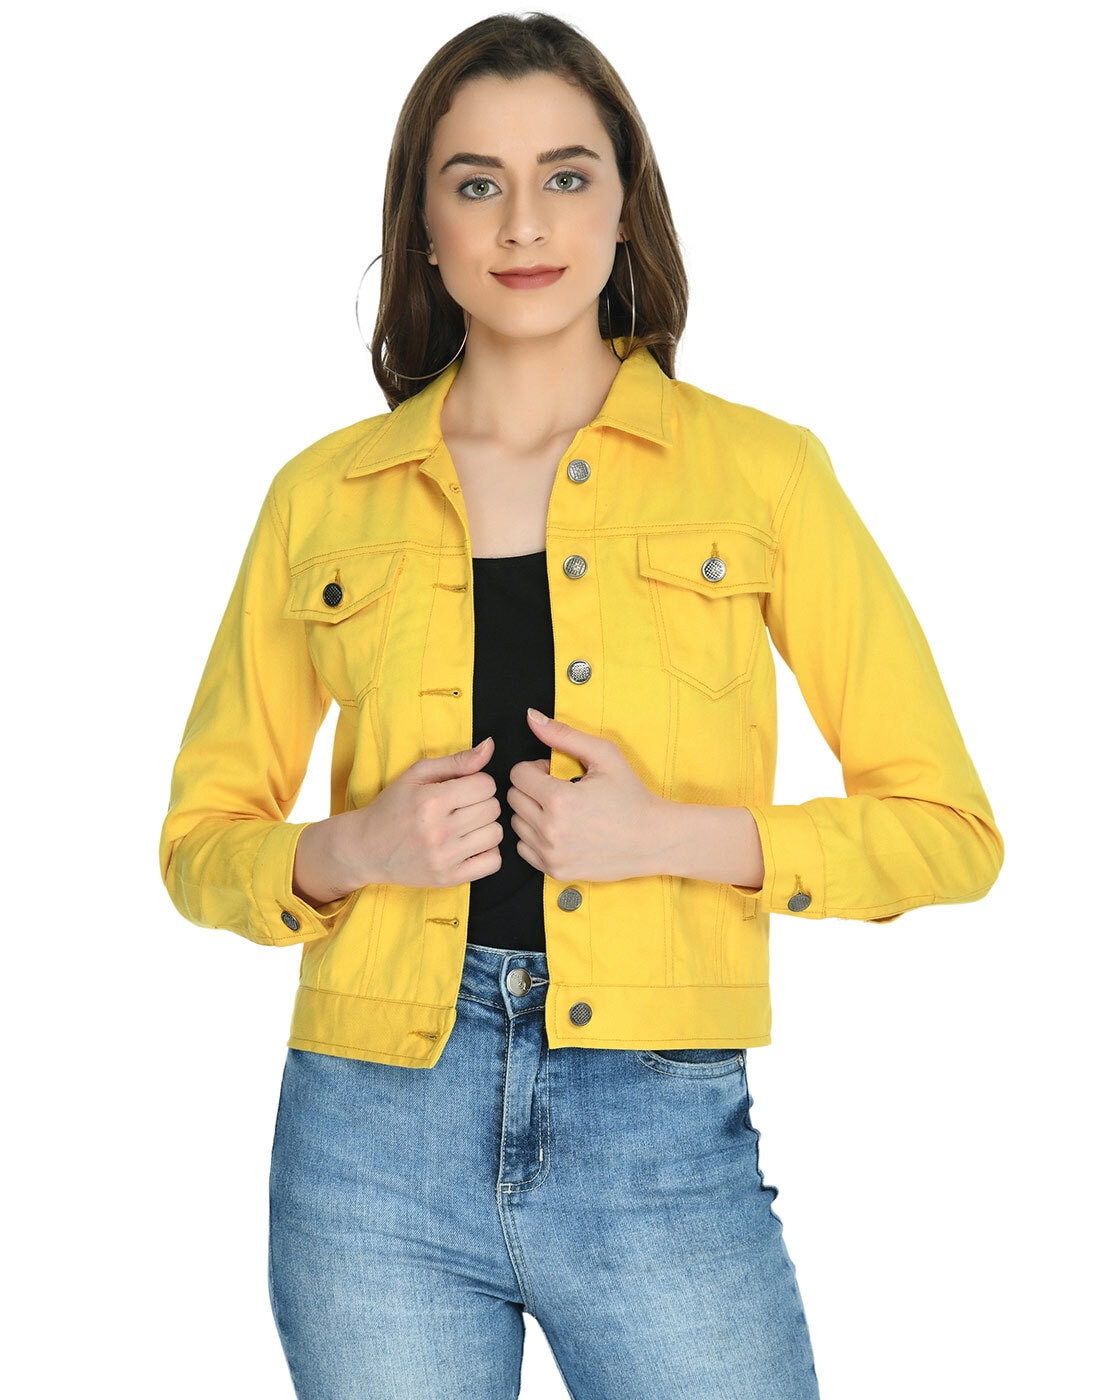 Jeans Jacket And Coats For Women 2021 Autumn Casual Short Denim Jacket Pink  Yellow Pockets Lady Denim Coat Outerwear Clothes - Denim Coat - AliExpress